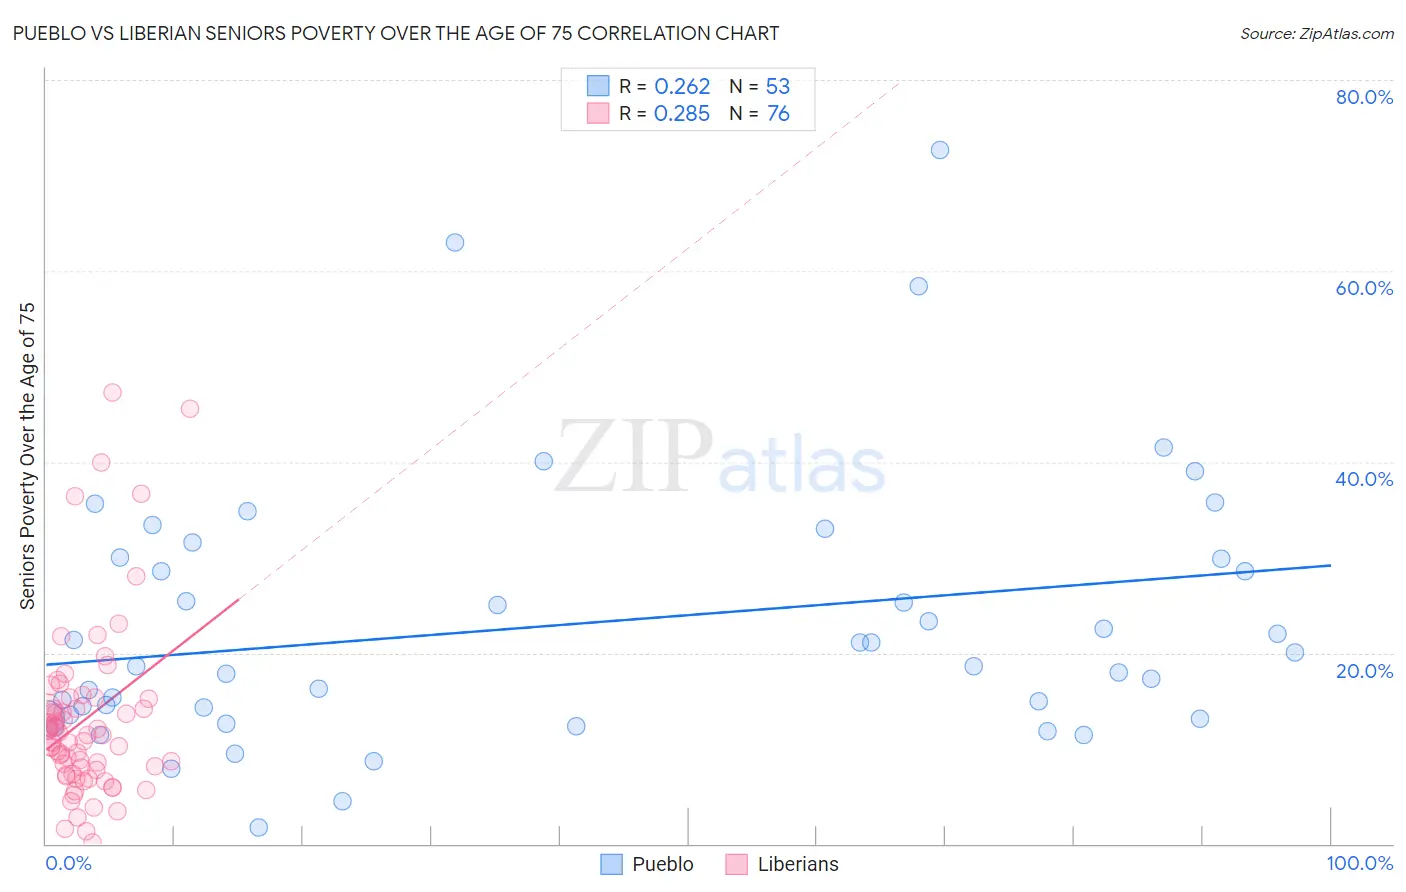 Pueblo vs Liberian Seniors Poverty Over the Age of 75